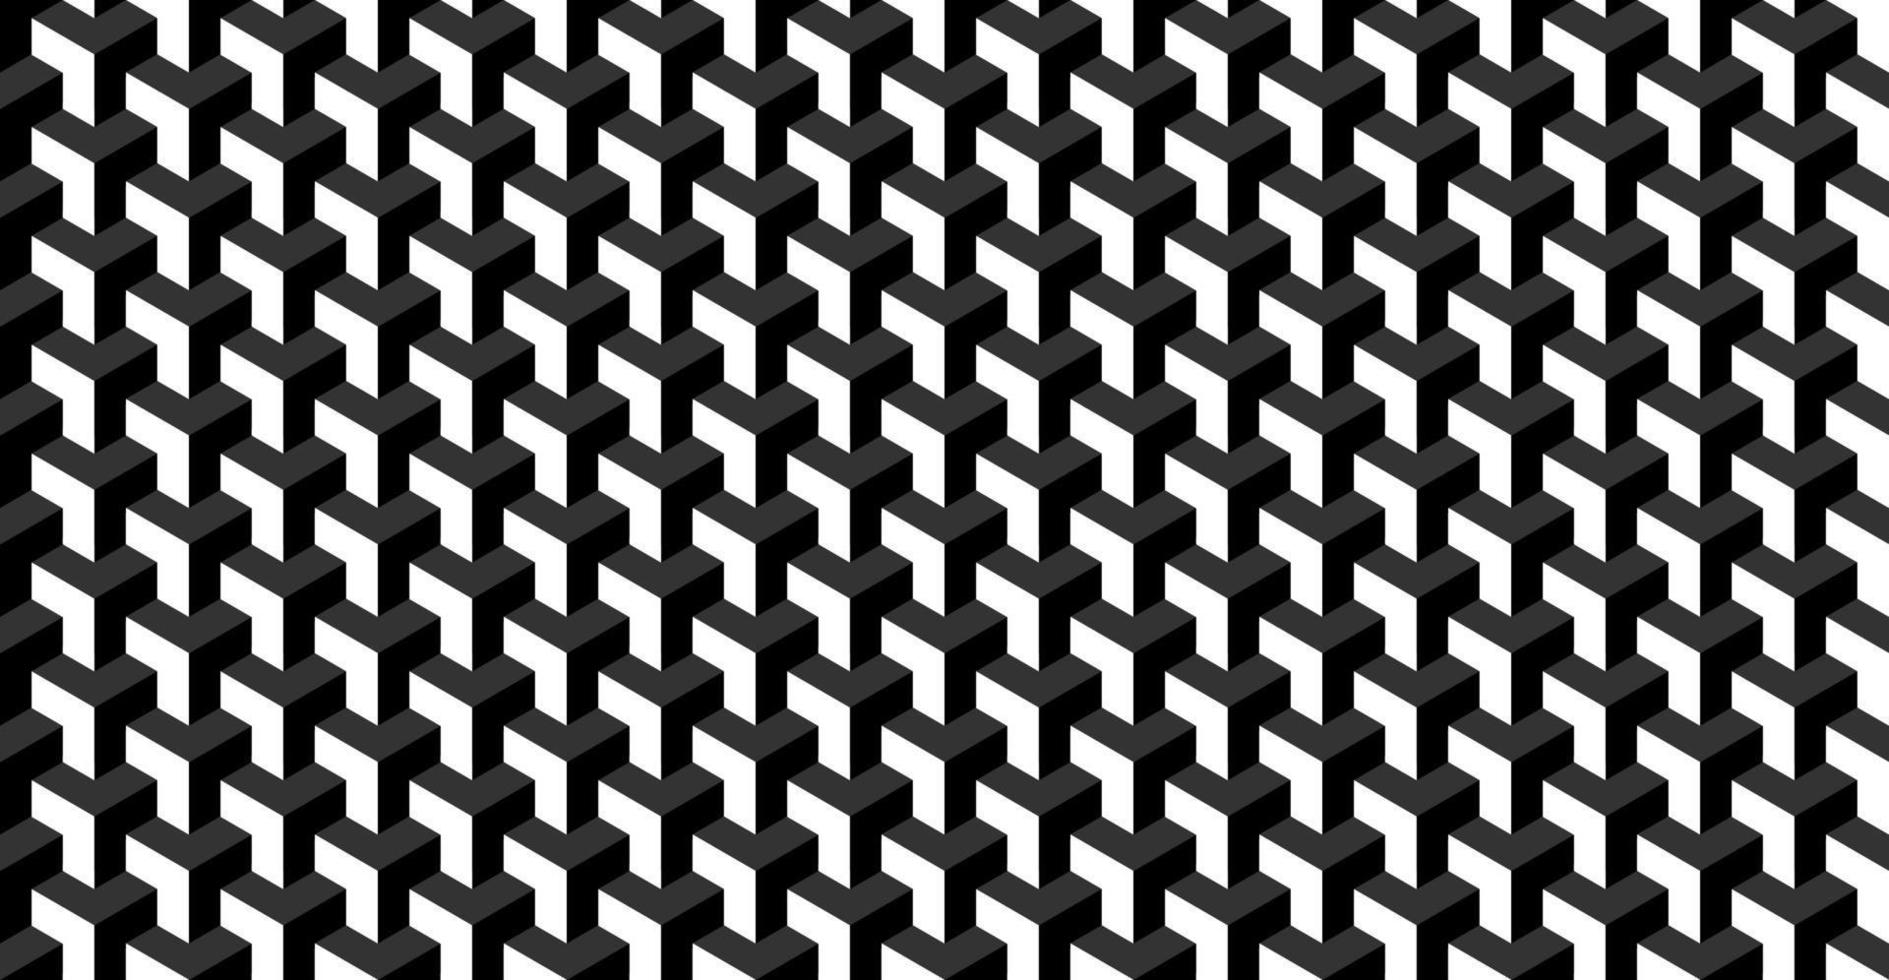 preto e branco sem costura padrão geométrico vetor